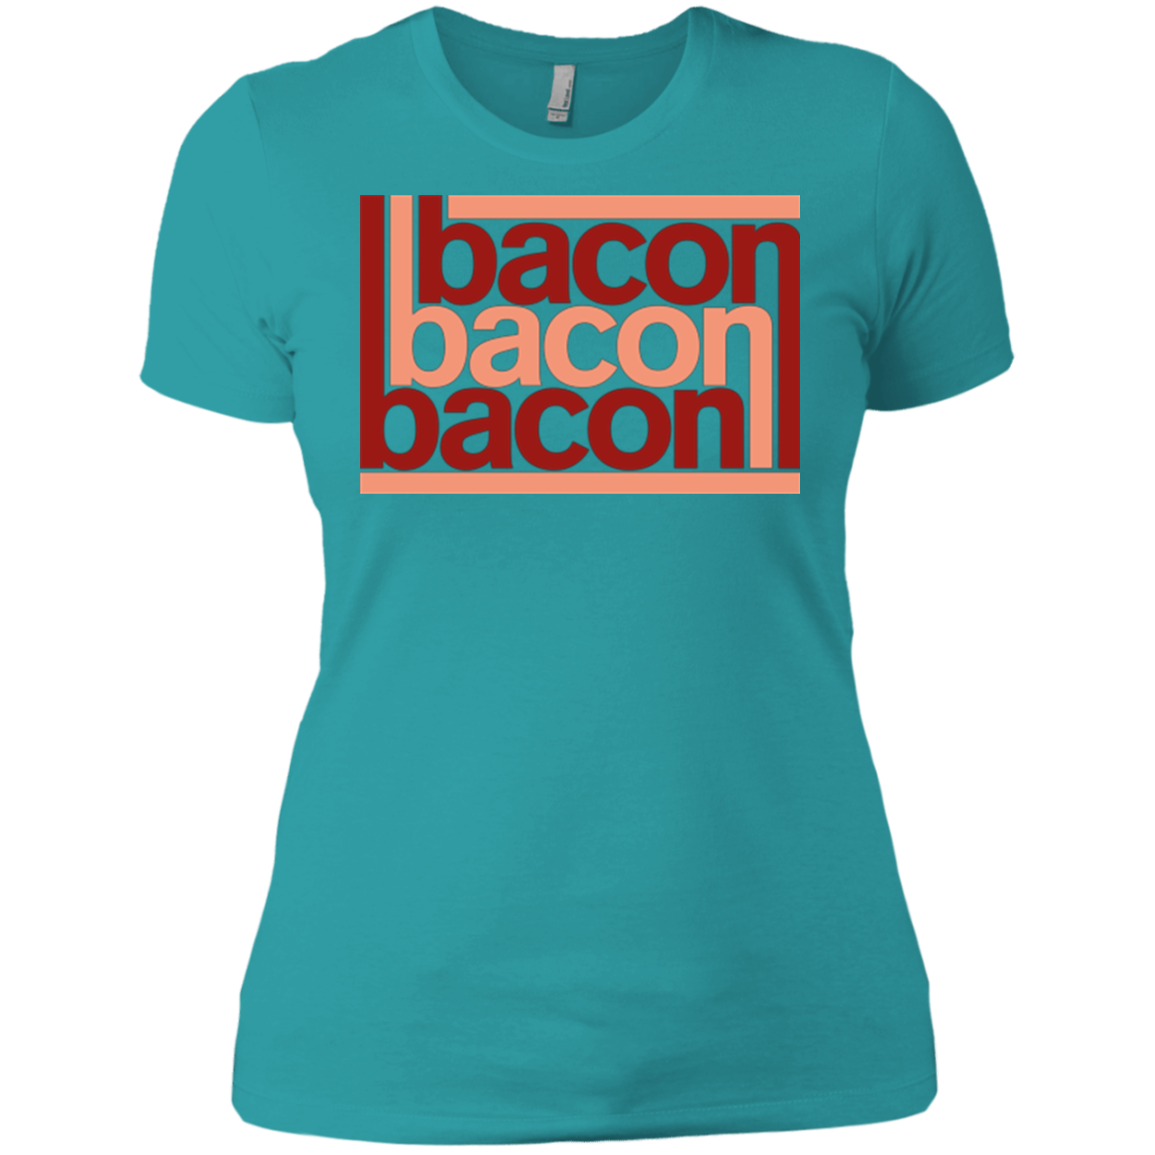 Bacon-Bacon-Bacon Women's Premium T-Shirt